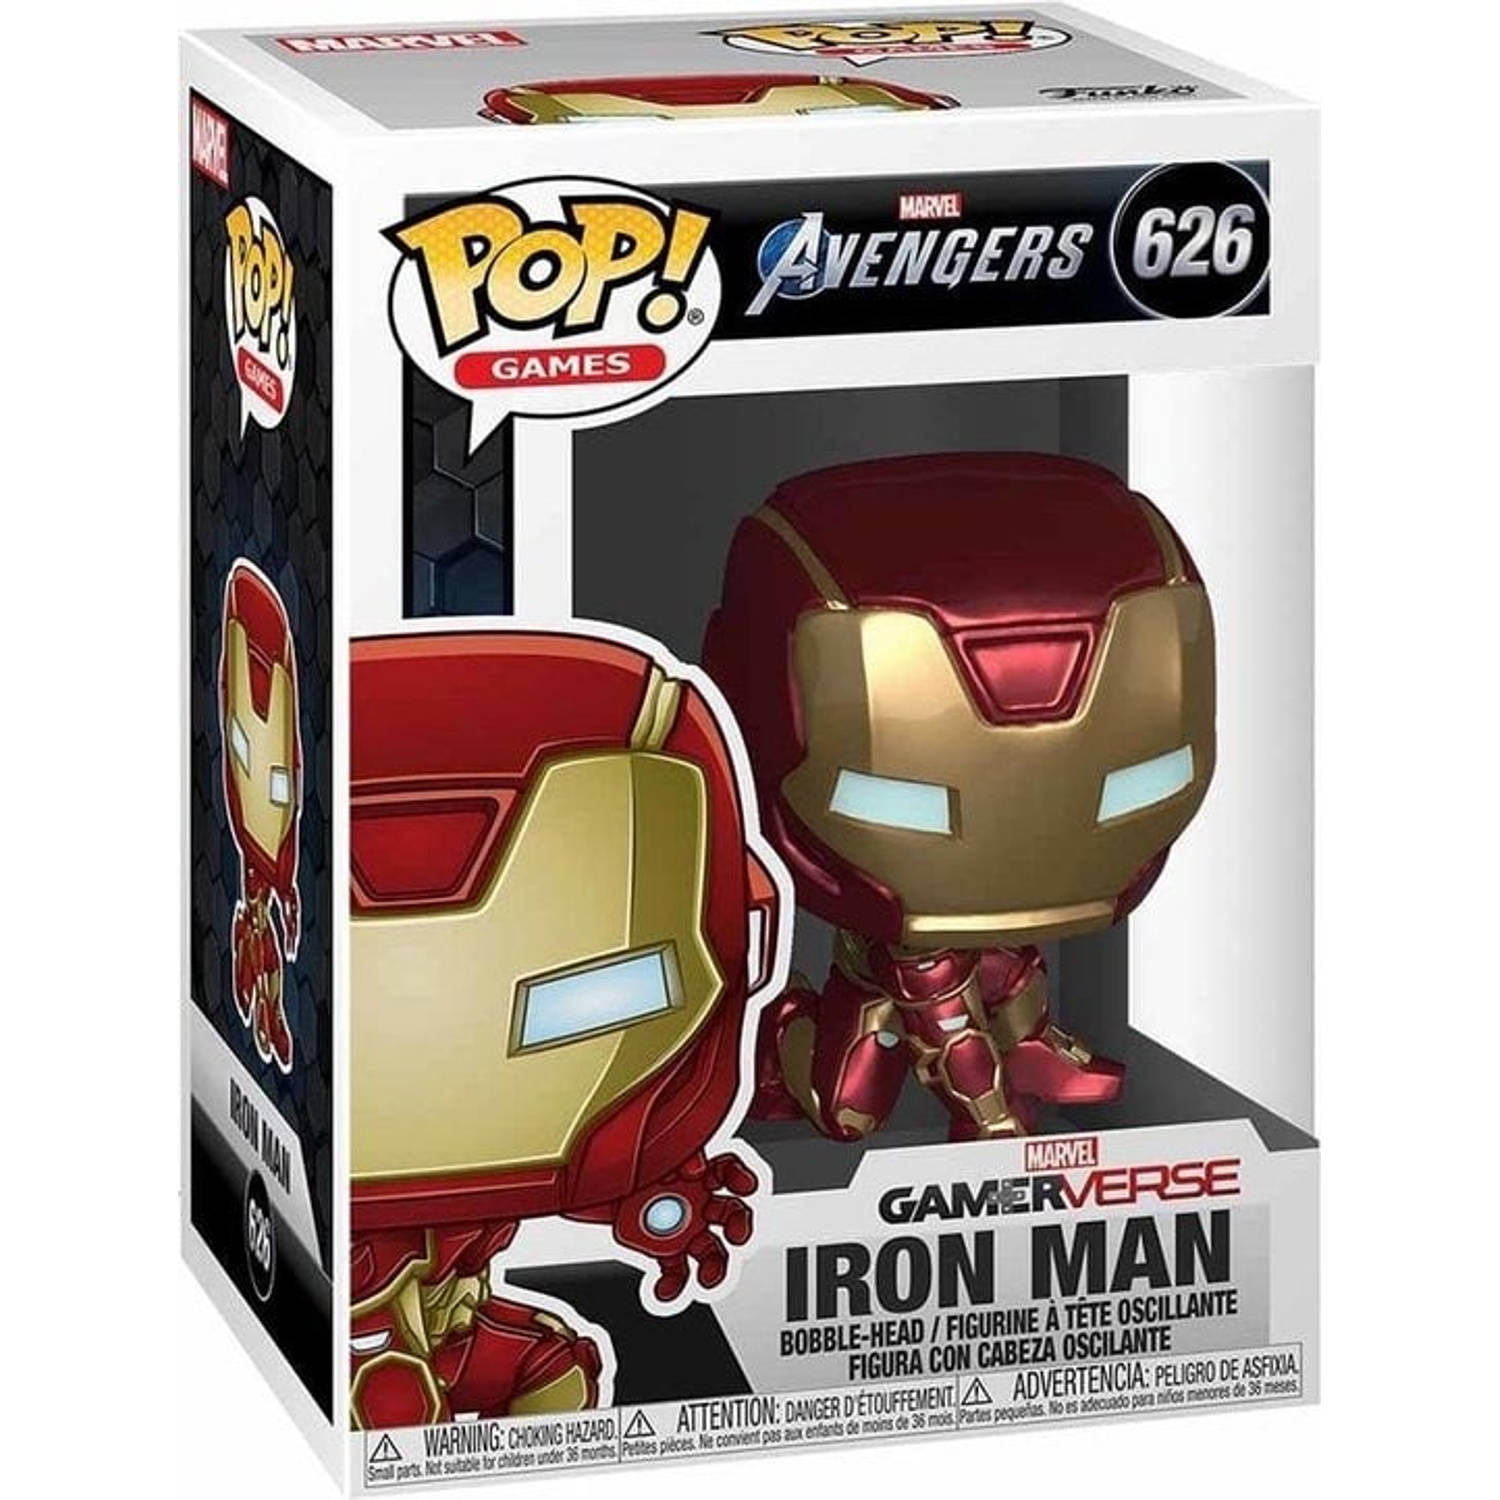 Pop Marvel: Avengers Game Iron Man (Stark Tech) Funko Pop #626